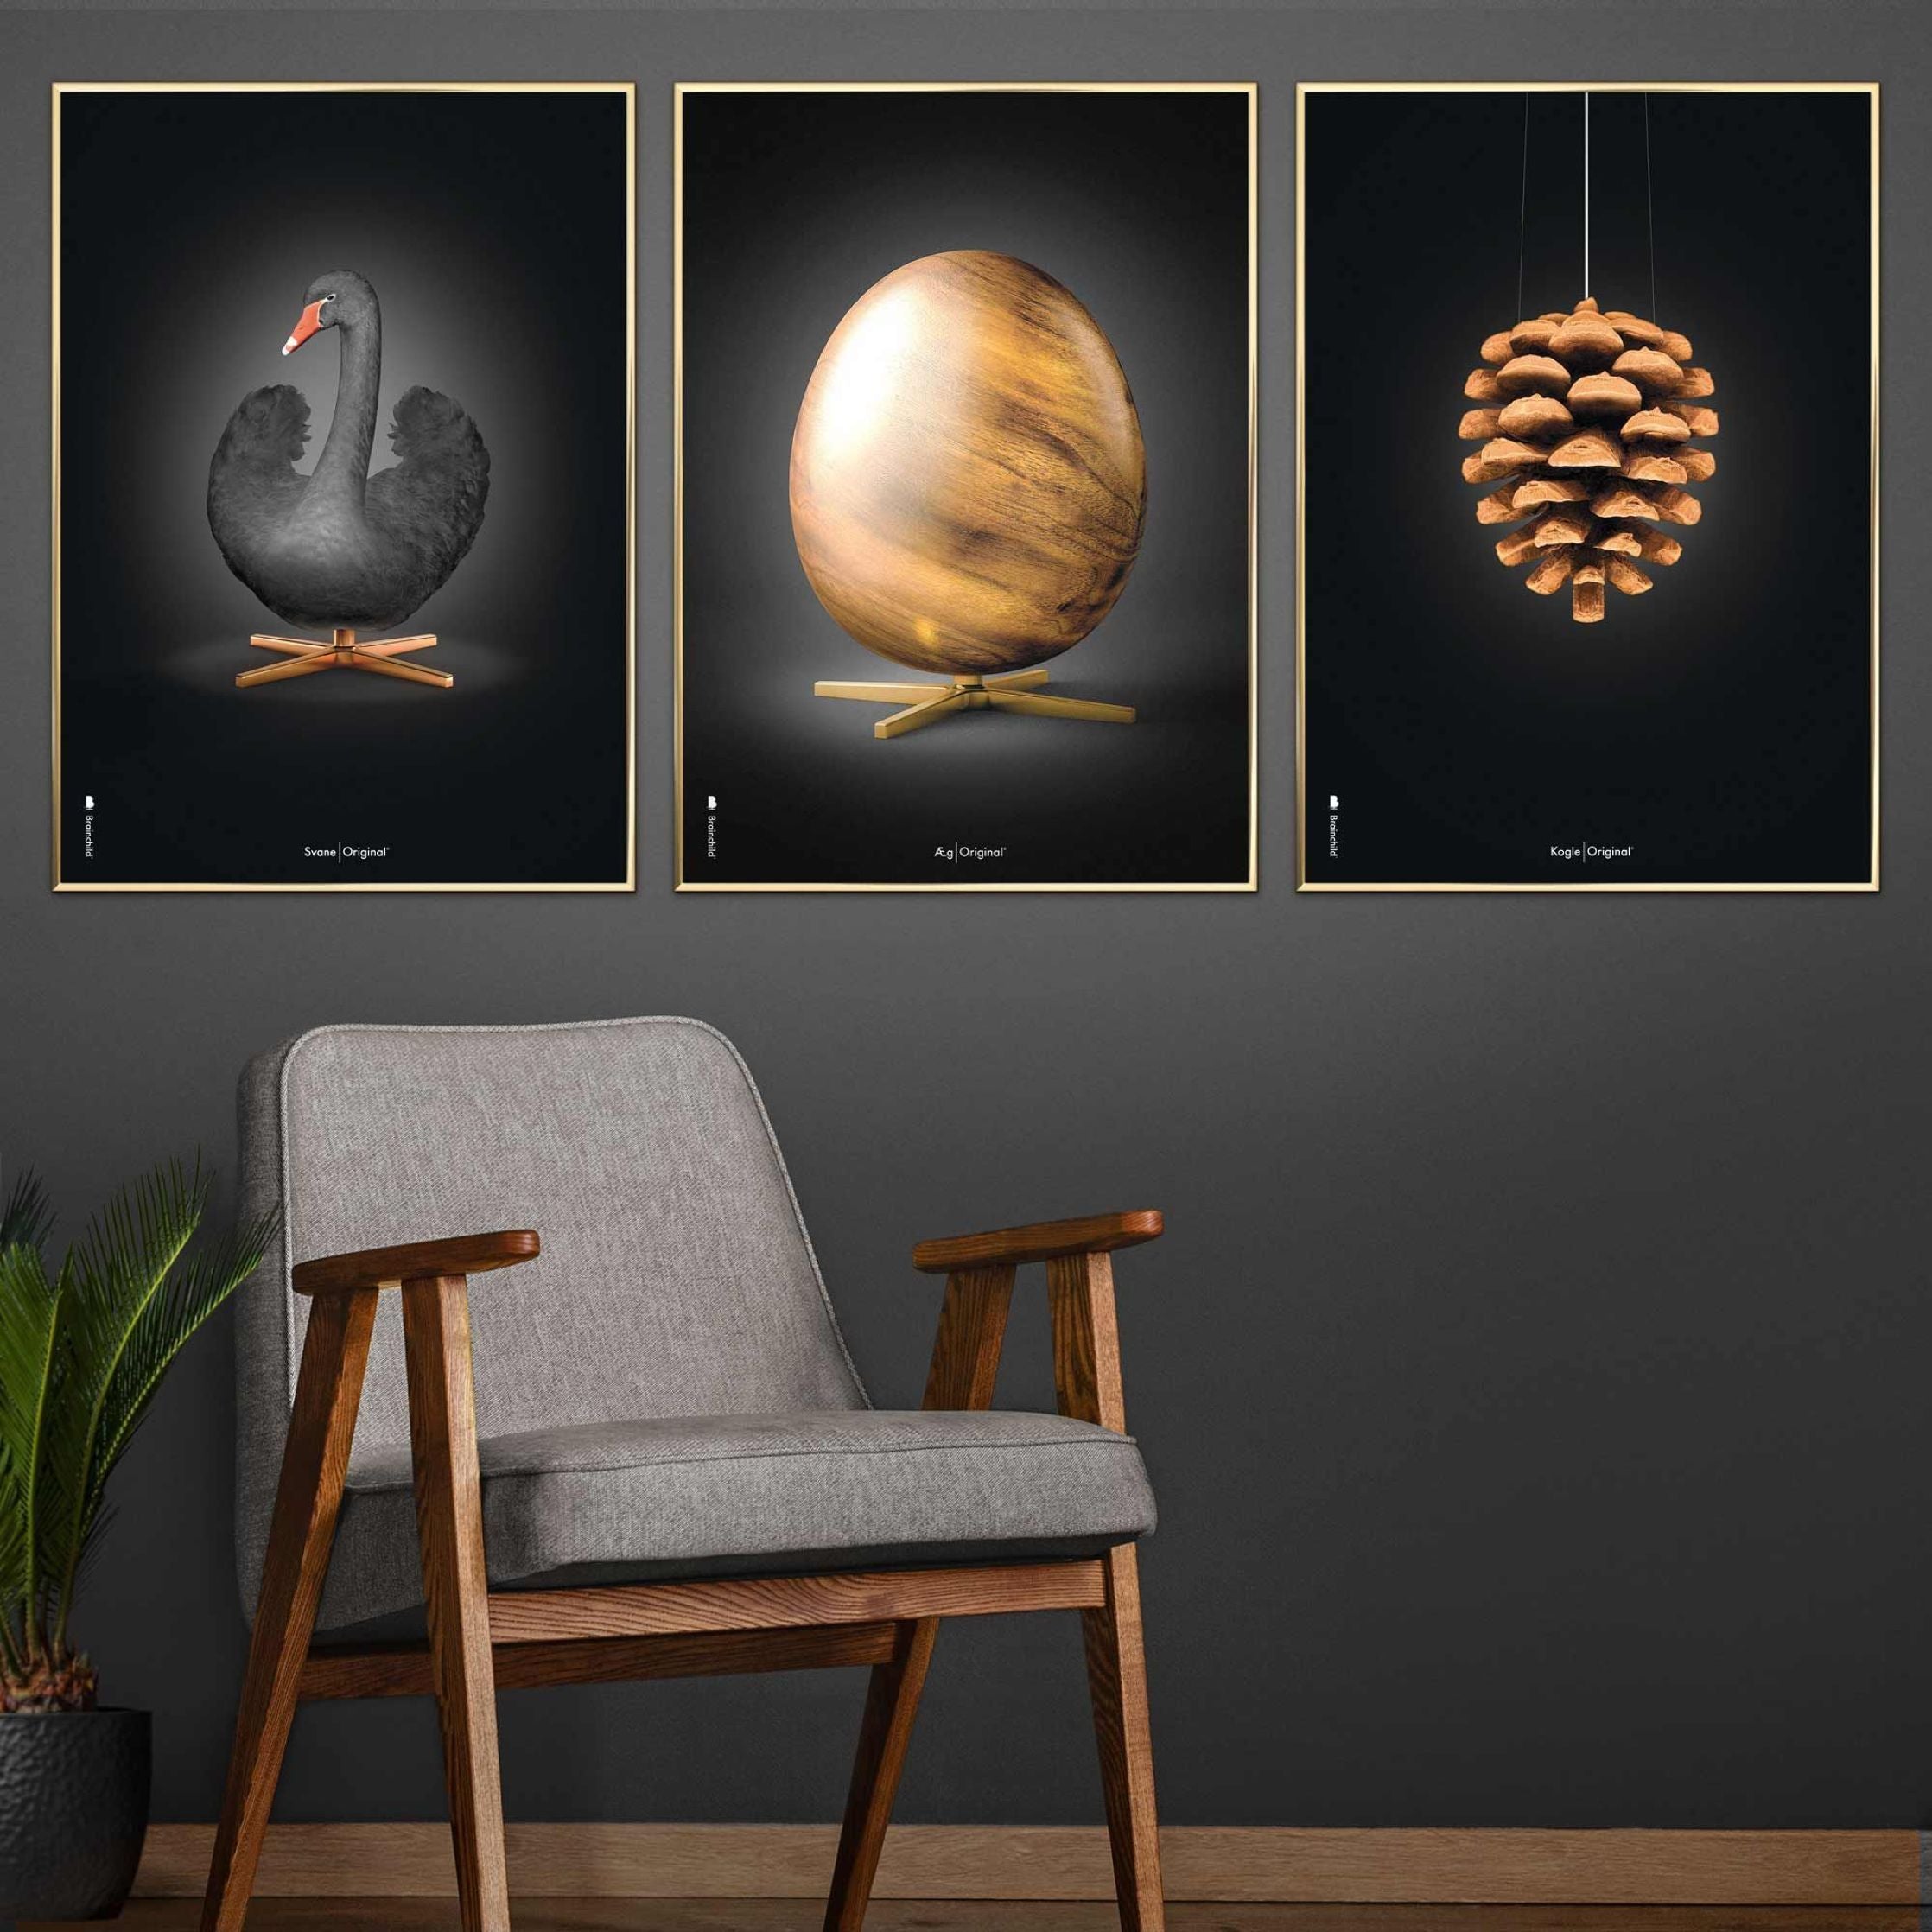 Brainchild Pine Cone Classic Poster, Frame Made Of Light Wood 50x70 Cm, Black Background